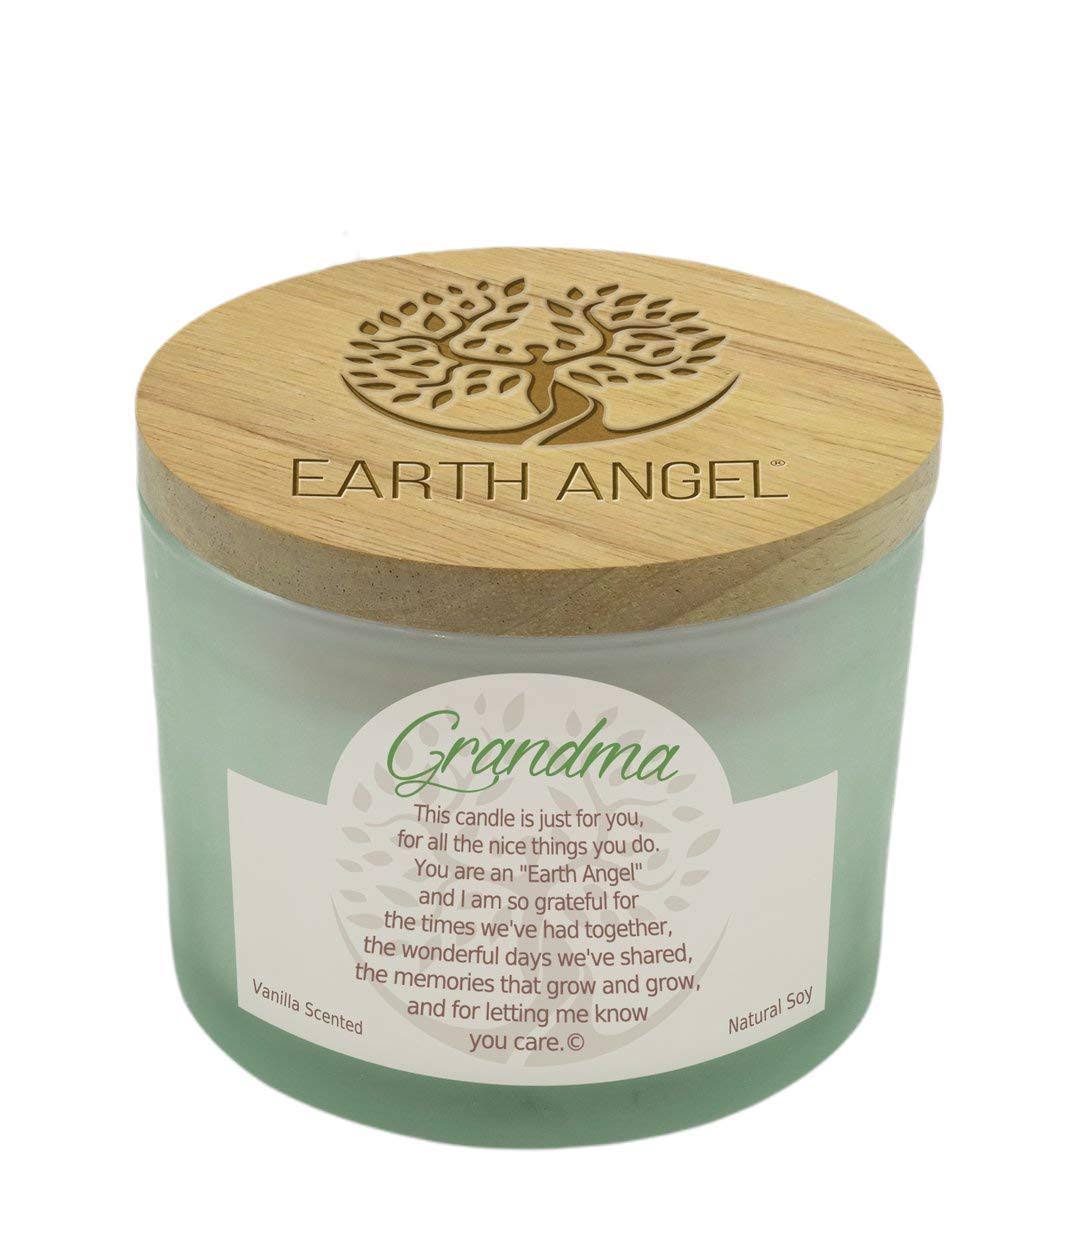 Earth Angel Natural Soy Candle 12 Ounce Grandma